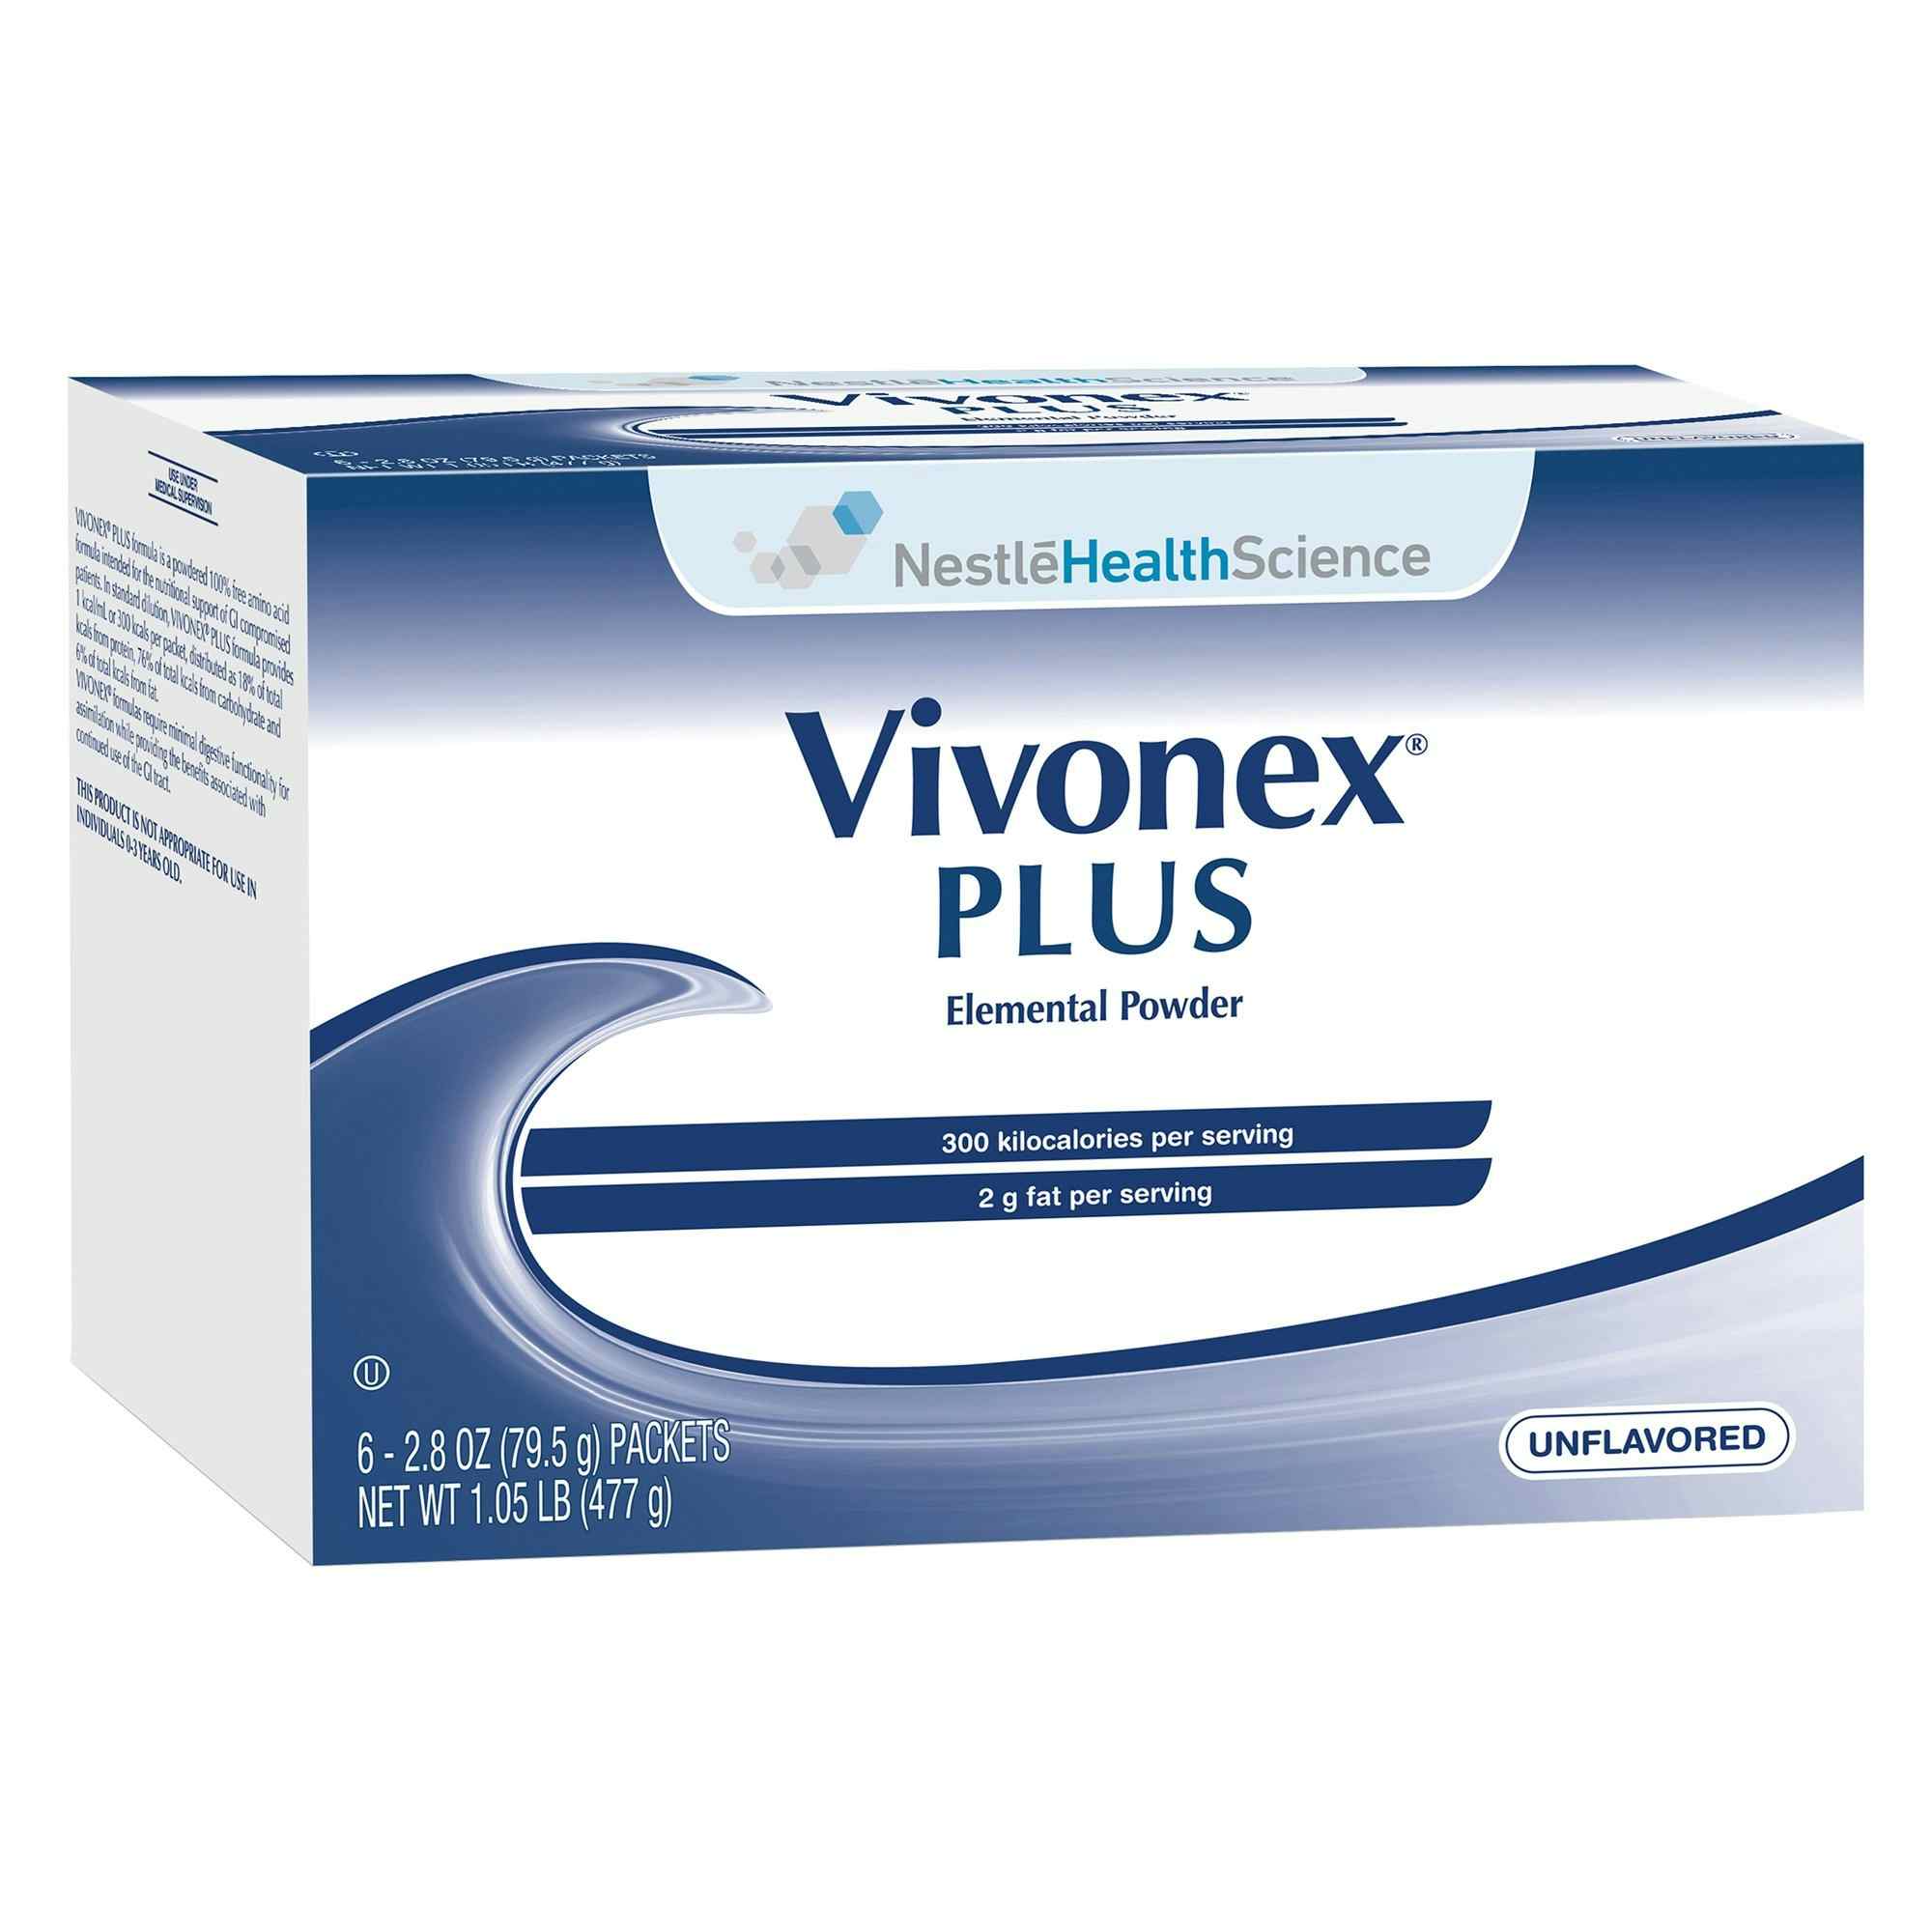 Nestle HealthScience Vivonex Plus Elemental Powder, Unflavored, 2.8 oz. Packets, 07129800, Box of 6